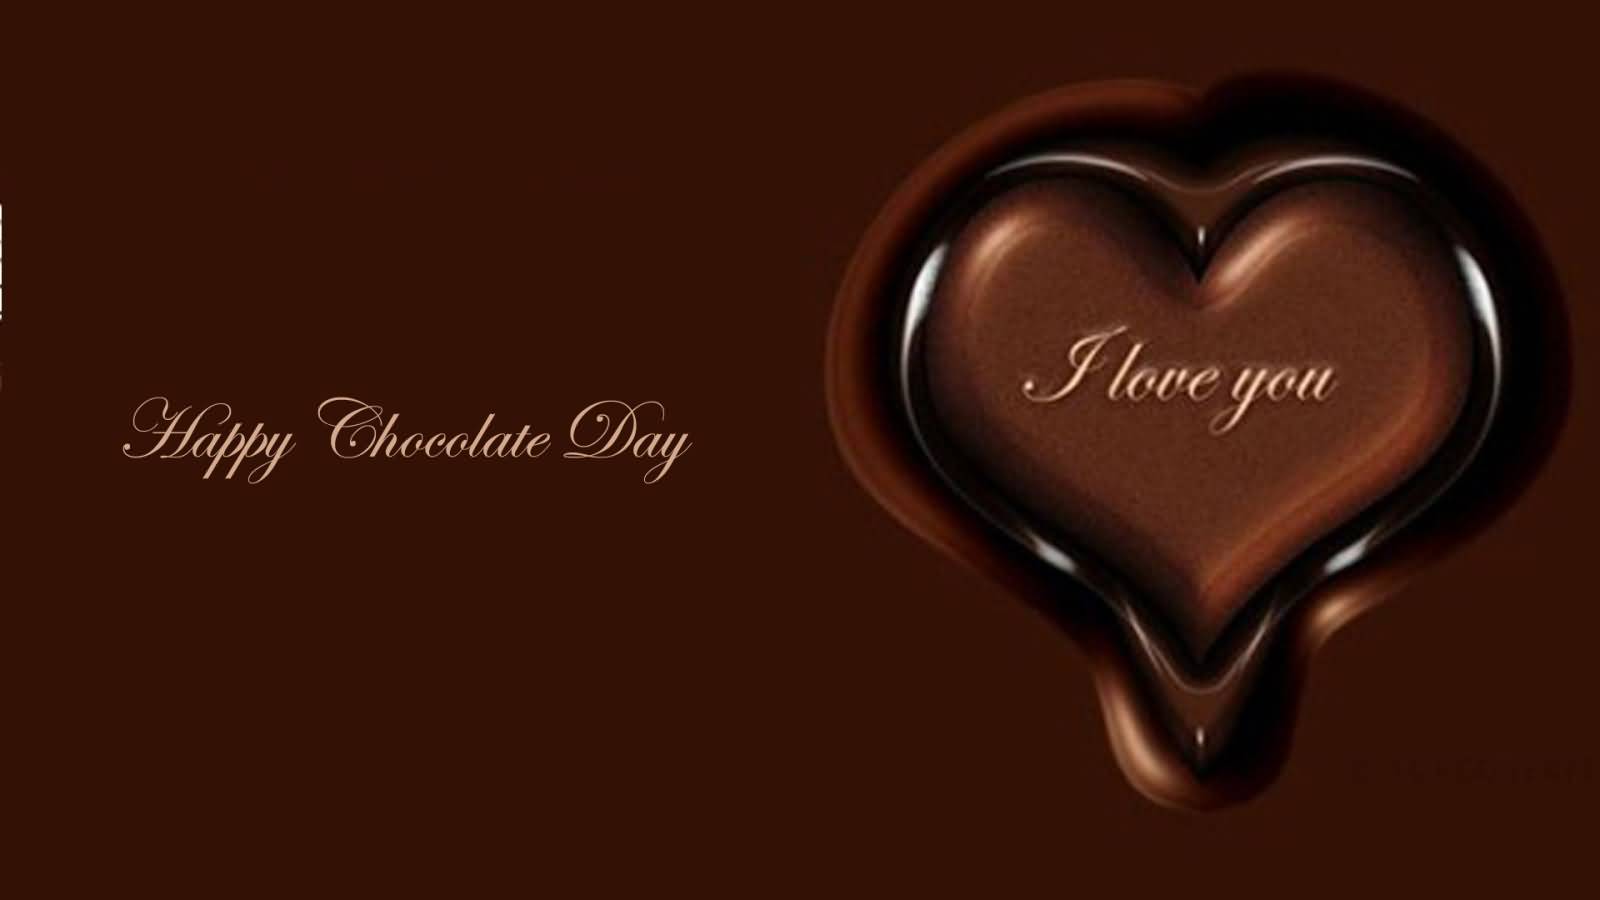 Happy Chocolate Day 2017 I Love You